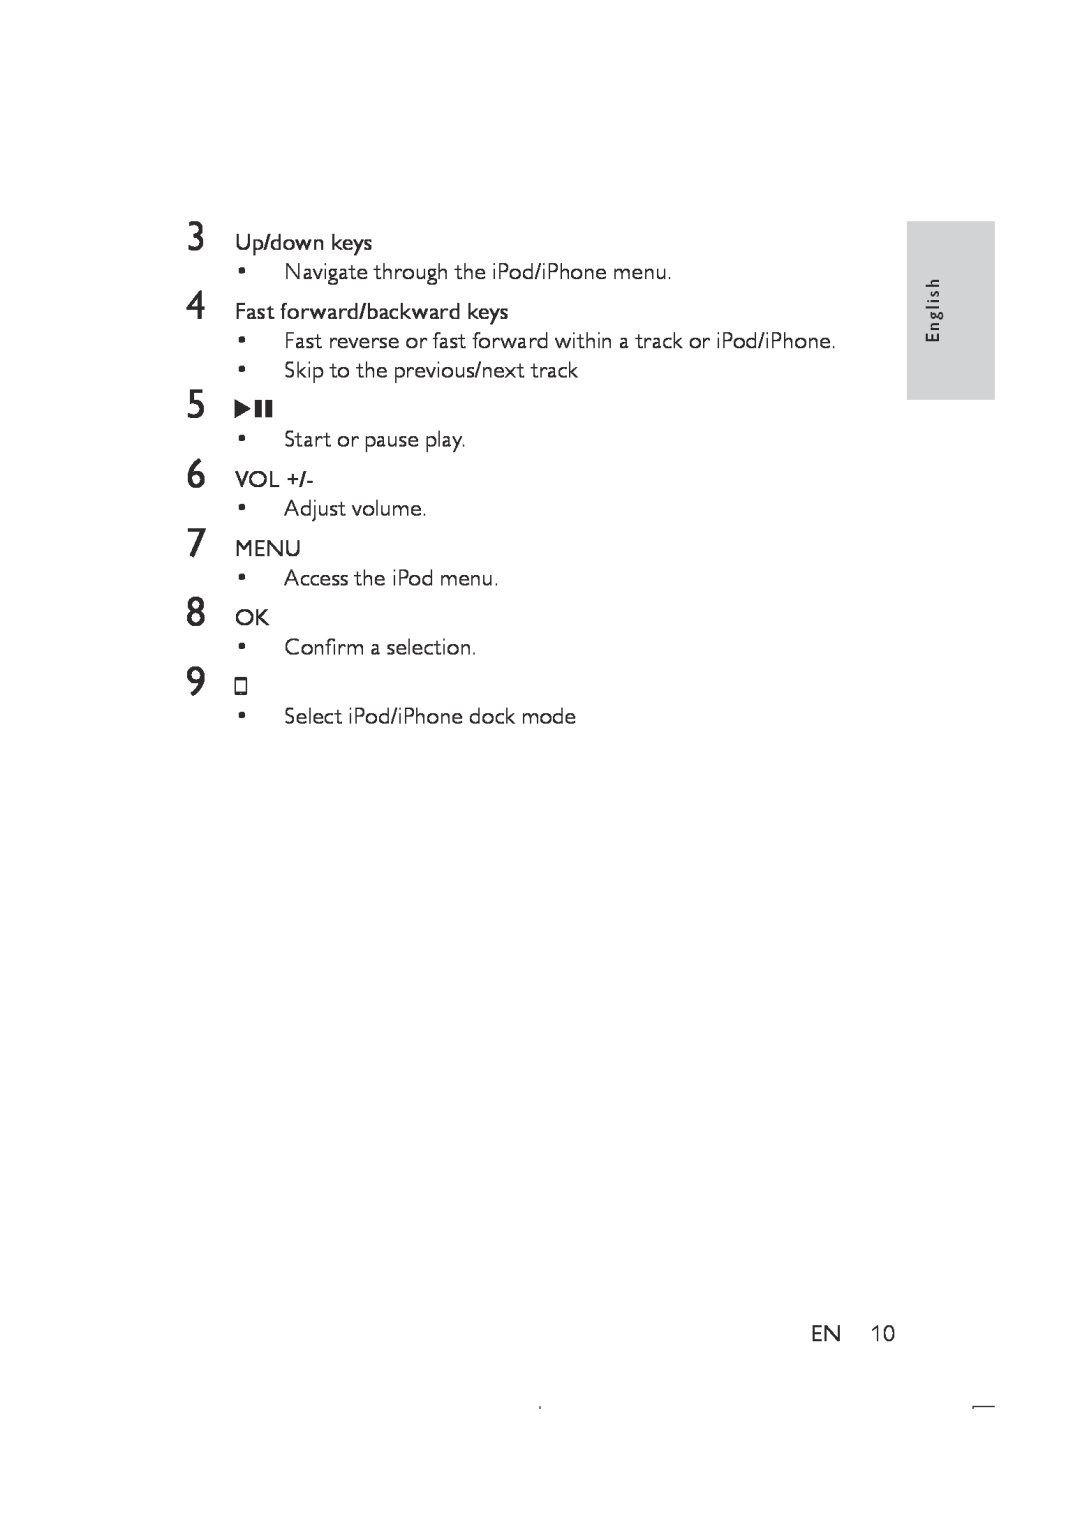 Philips DS8500 user manual Up/down keys Navigate through the iPod/iPhone menu, Fast forward/backward keys, English 